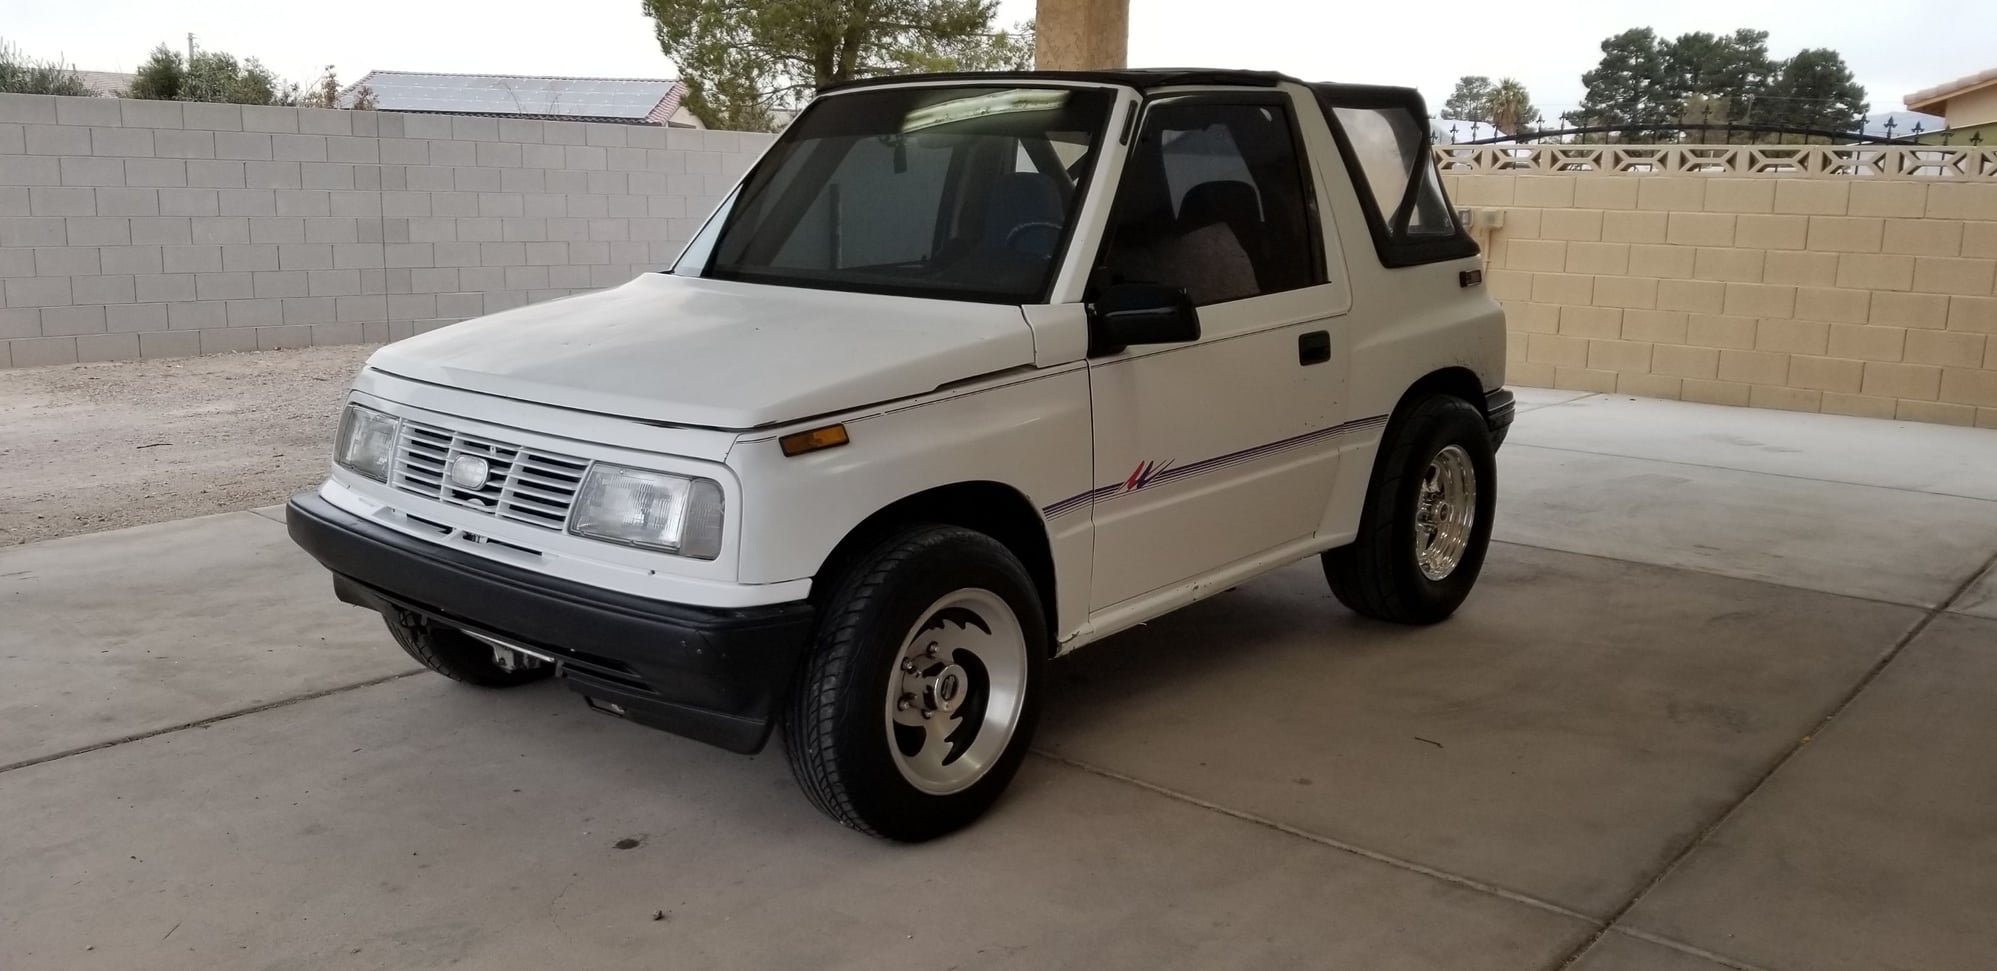 1993 Geo Tracker - LS/Turbo 1993 Geo Tracker.  Runs 9's, does wheelies. - Used - VIN 2CNBE18U7P6914136 - 200,000 Miles - 8 cyl - 2WD - Automatic - SUV - White - Las Vegas, NV 89131, United States